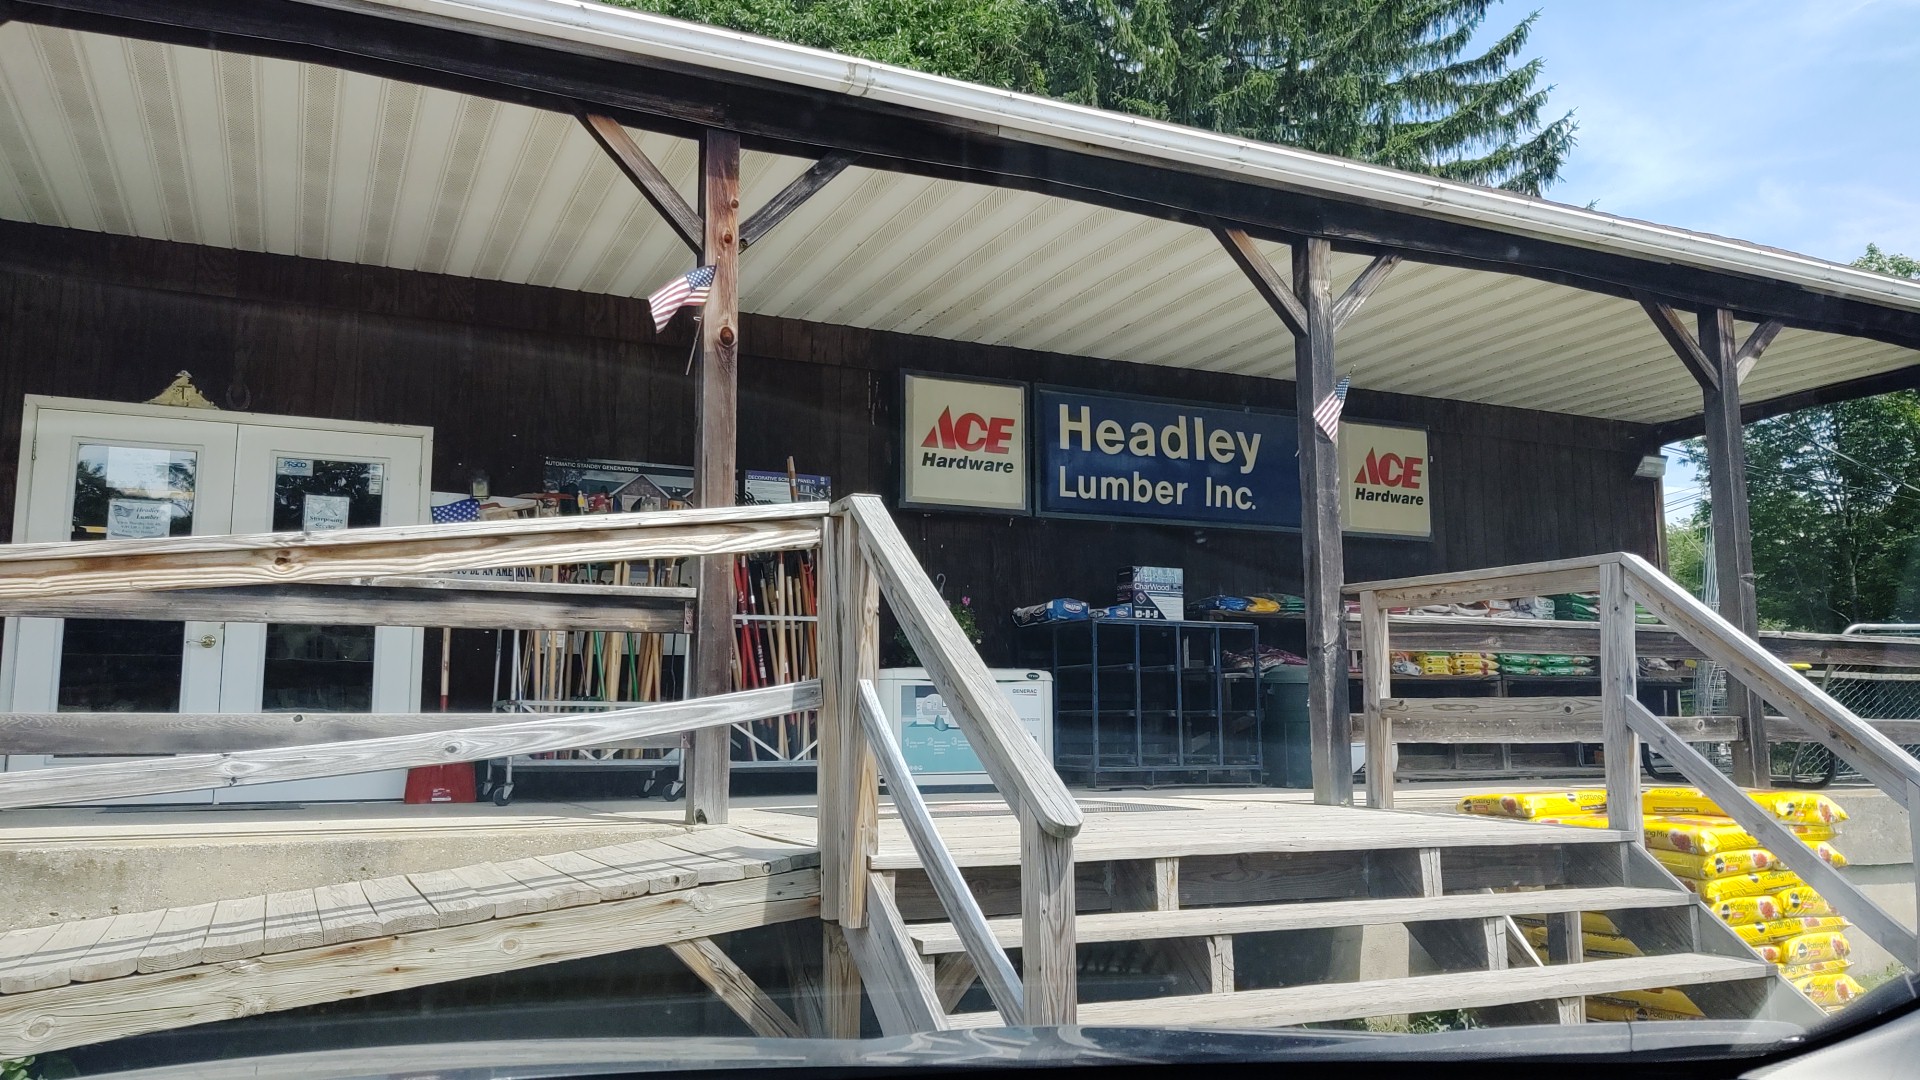 Headley Lumber Inc